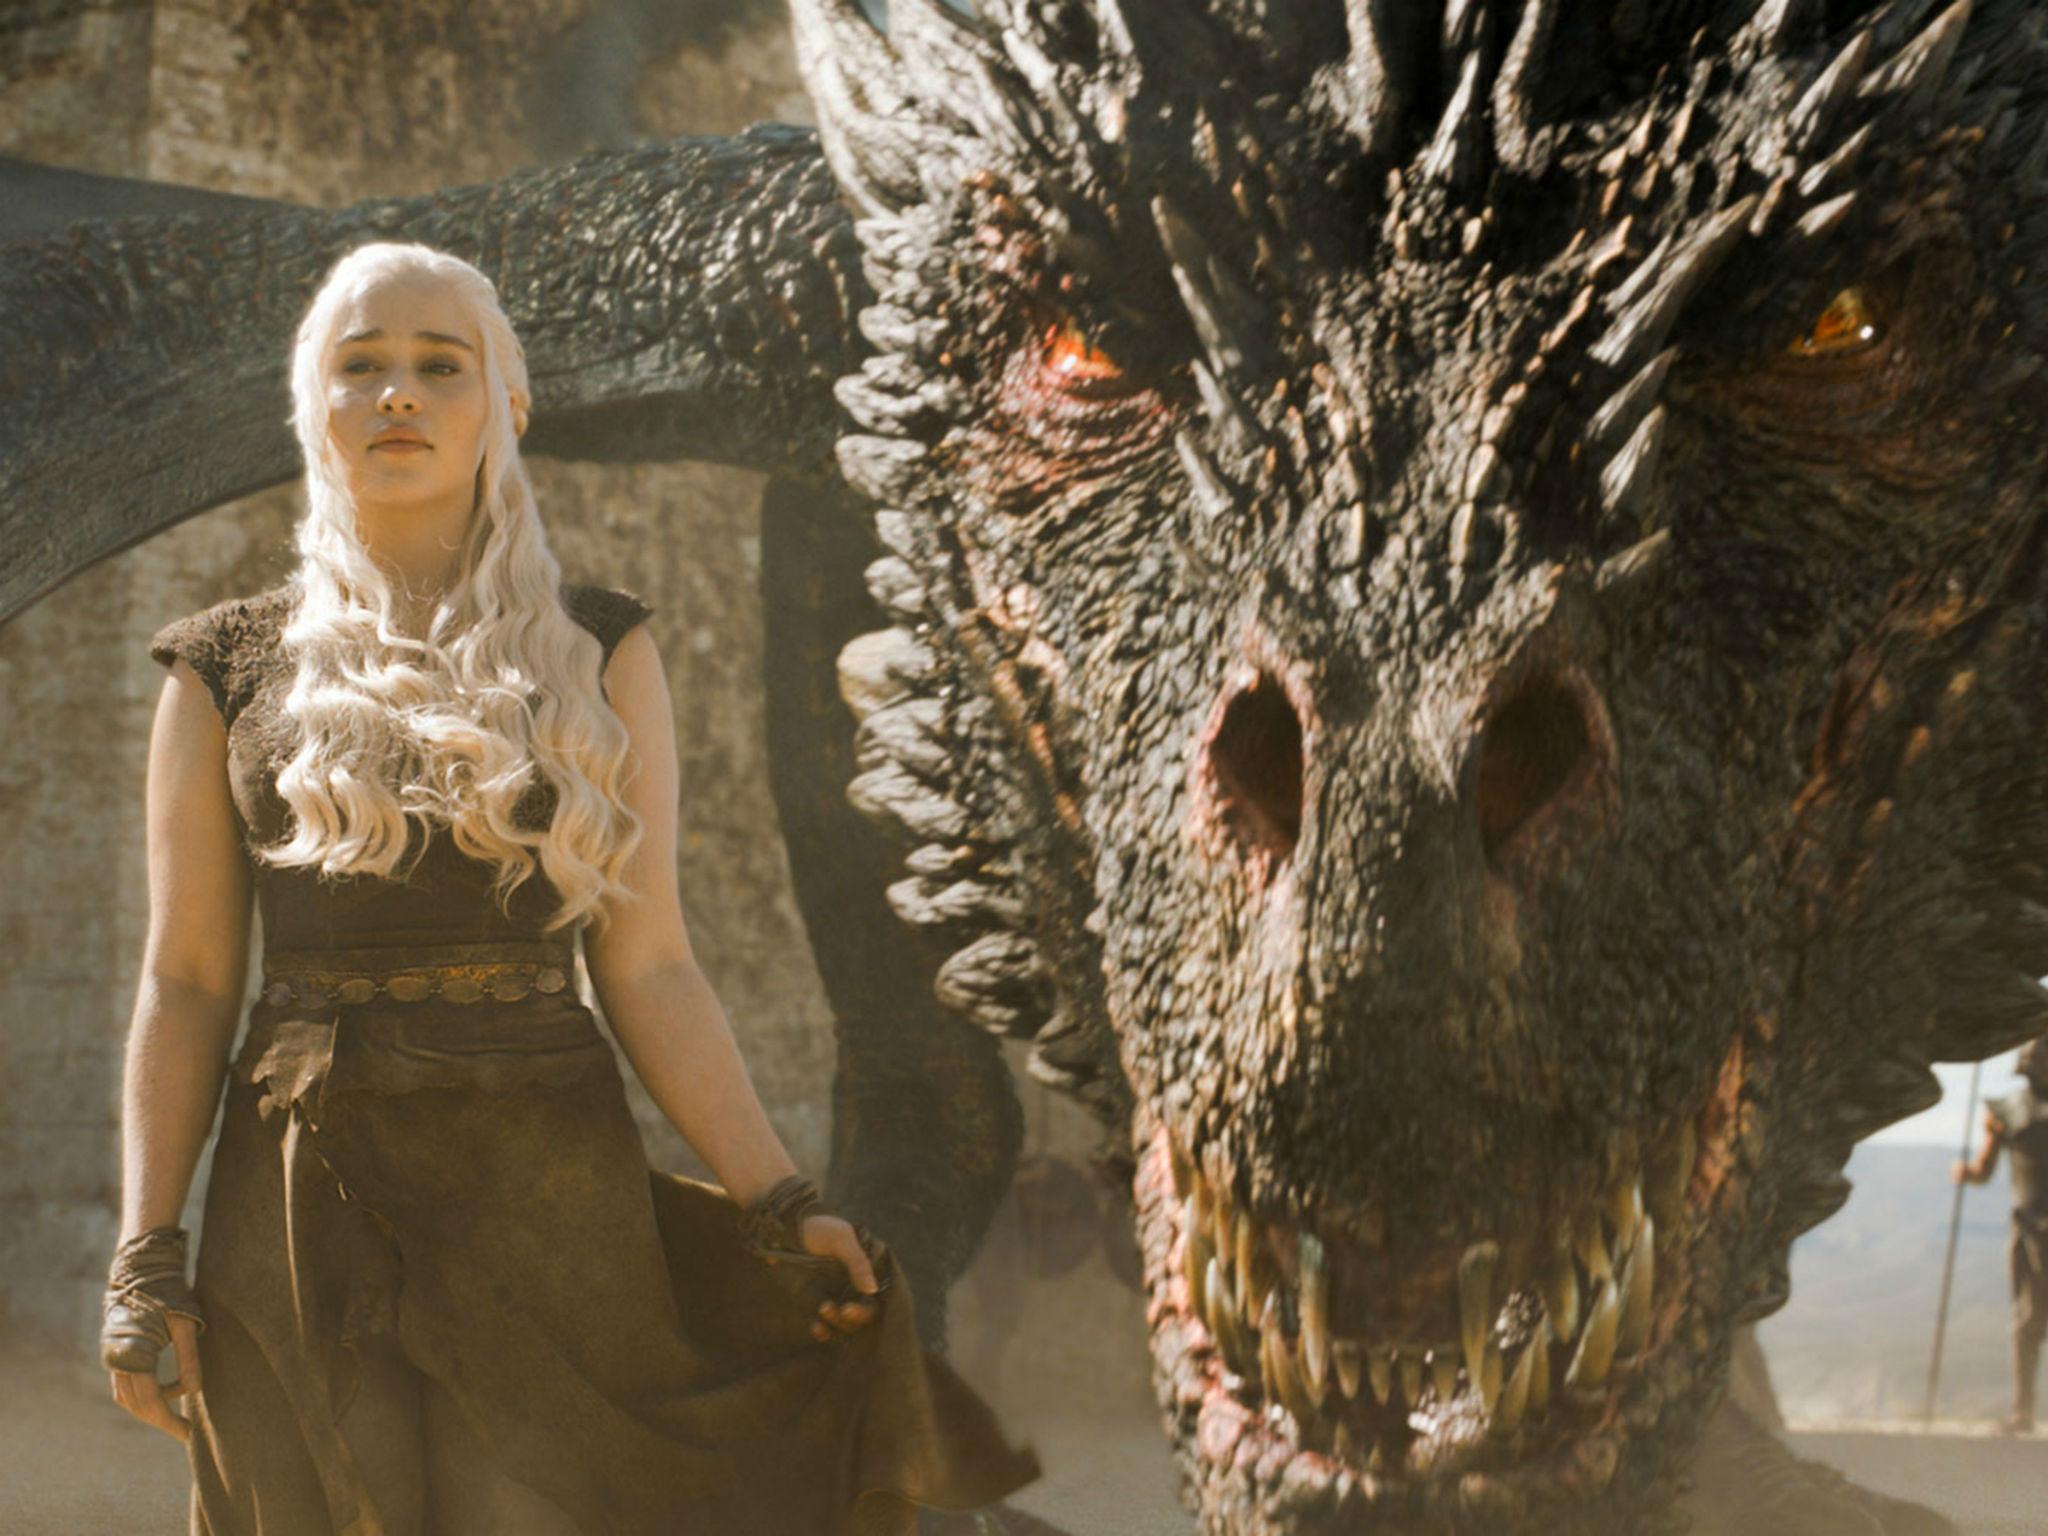 Дейенерис Таргариен с драконами. Дайненис Таргариен и дракон. The mother of dragons